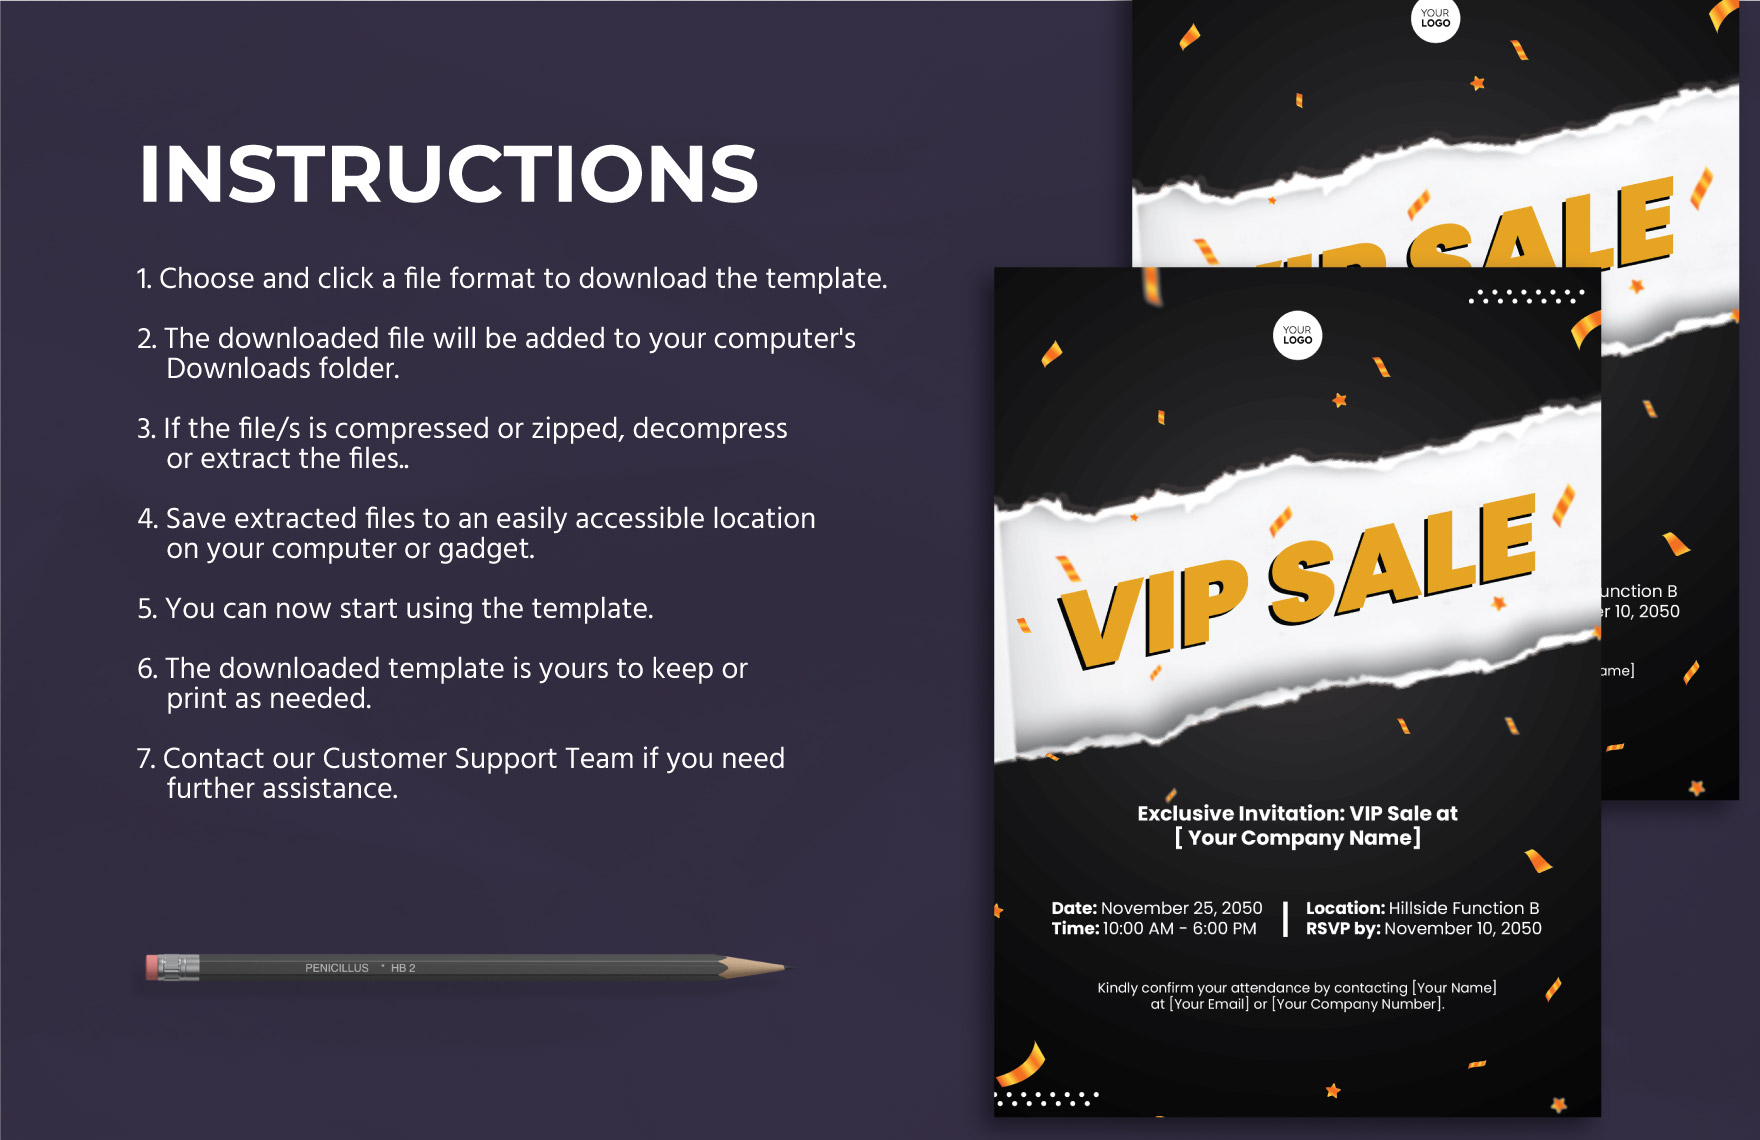 Sales VIP Sale Invitation Card Template